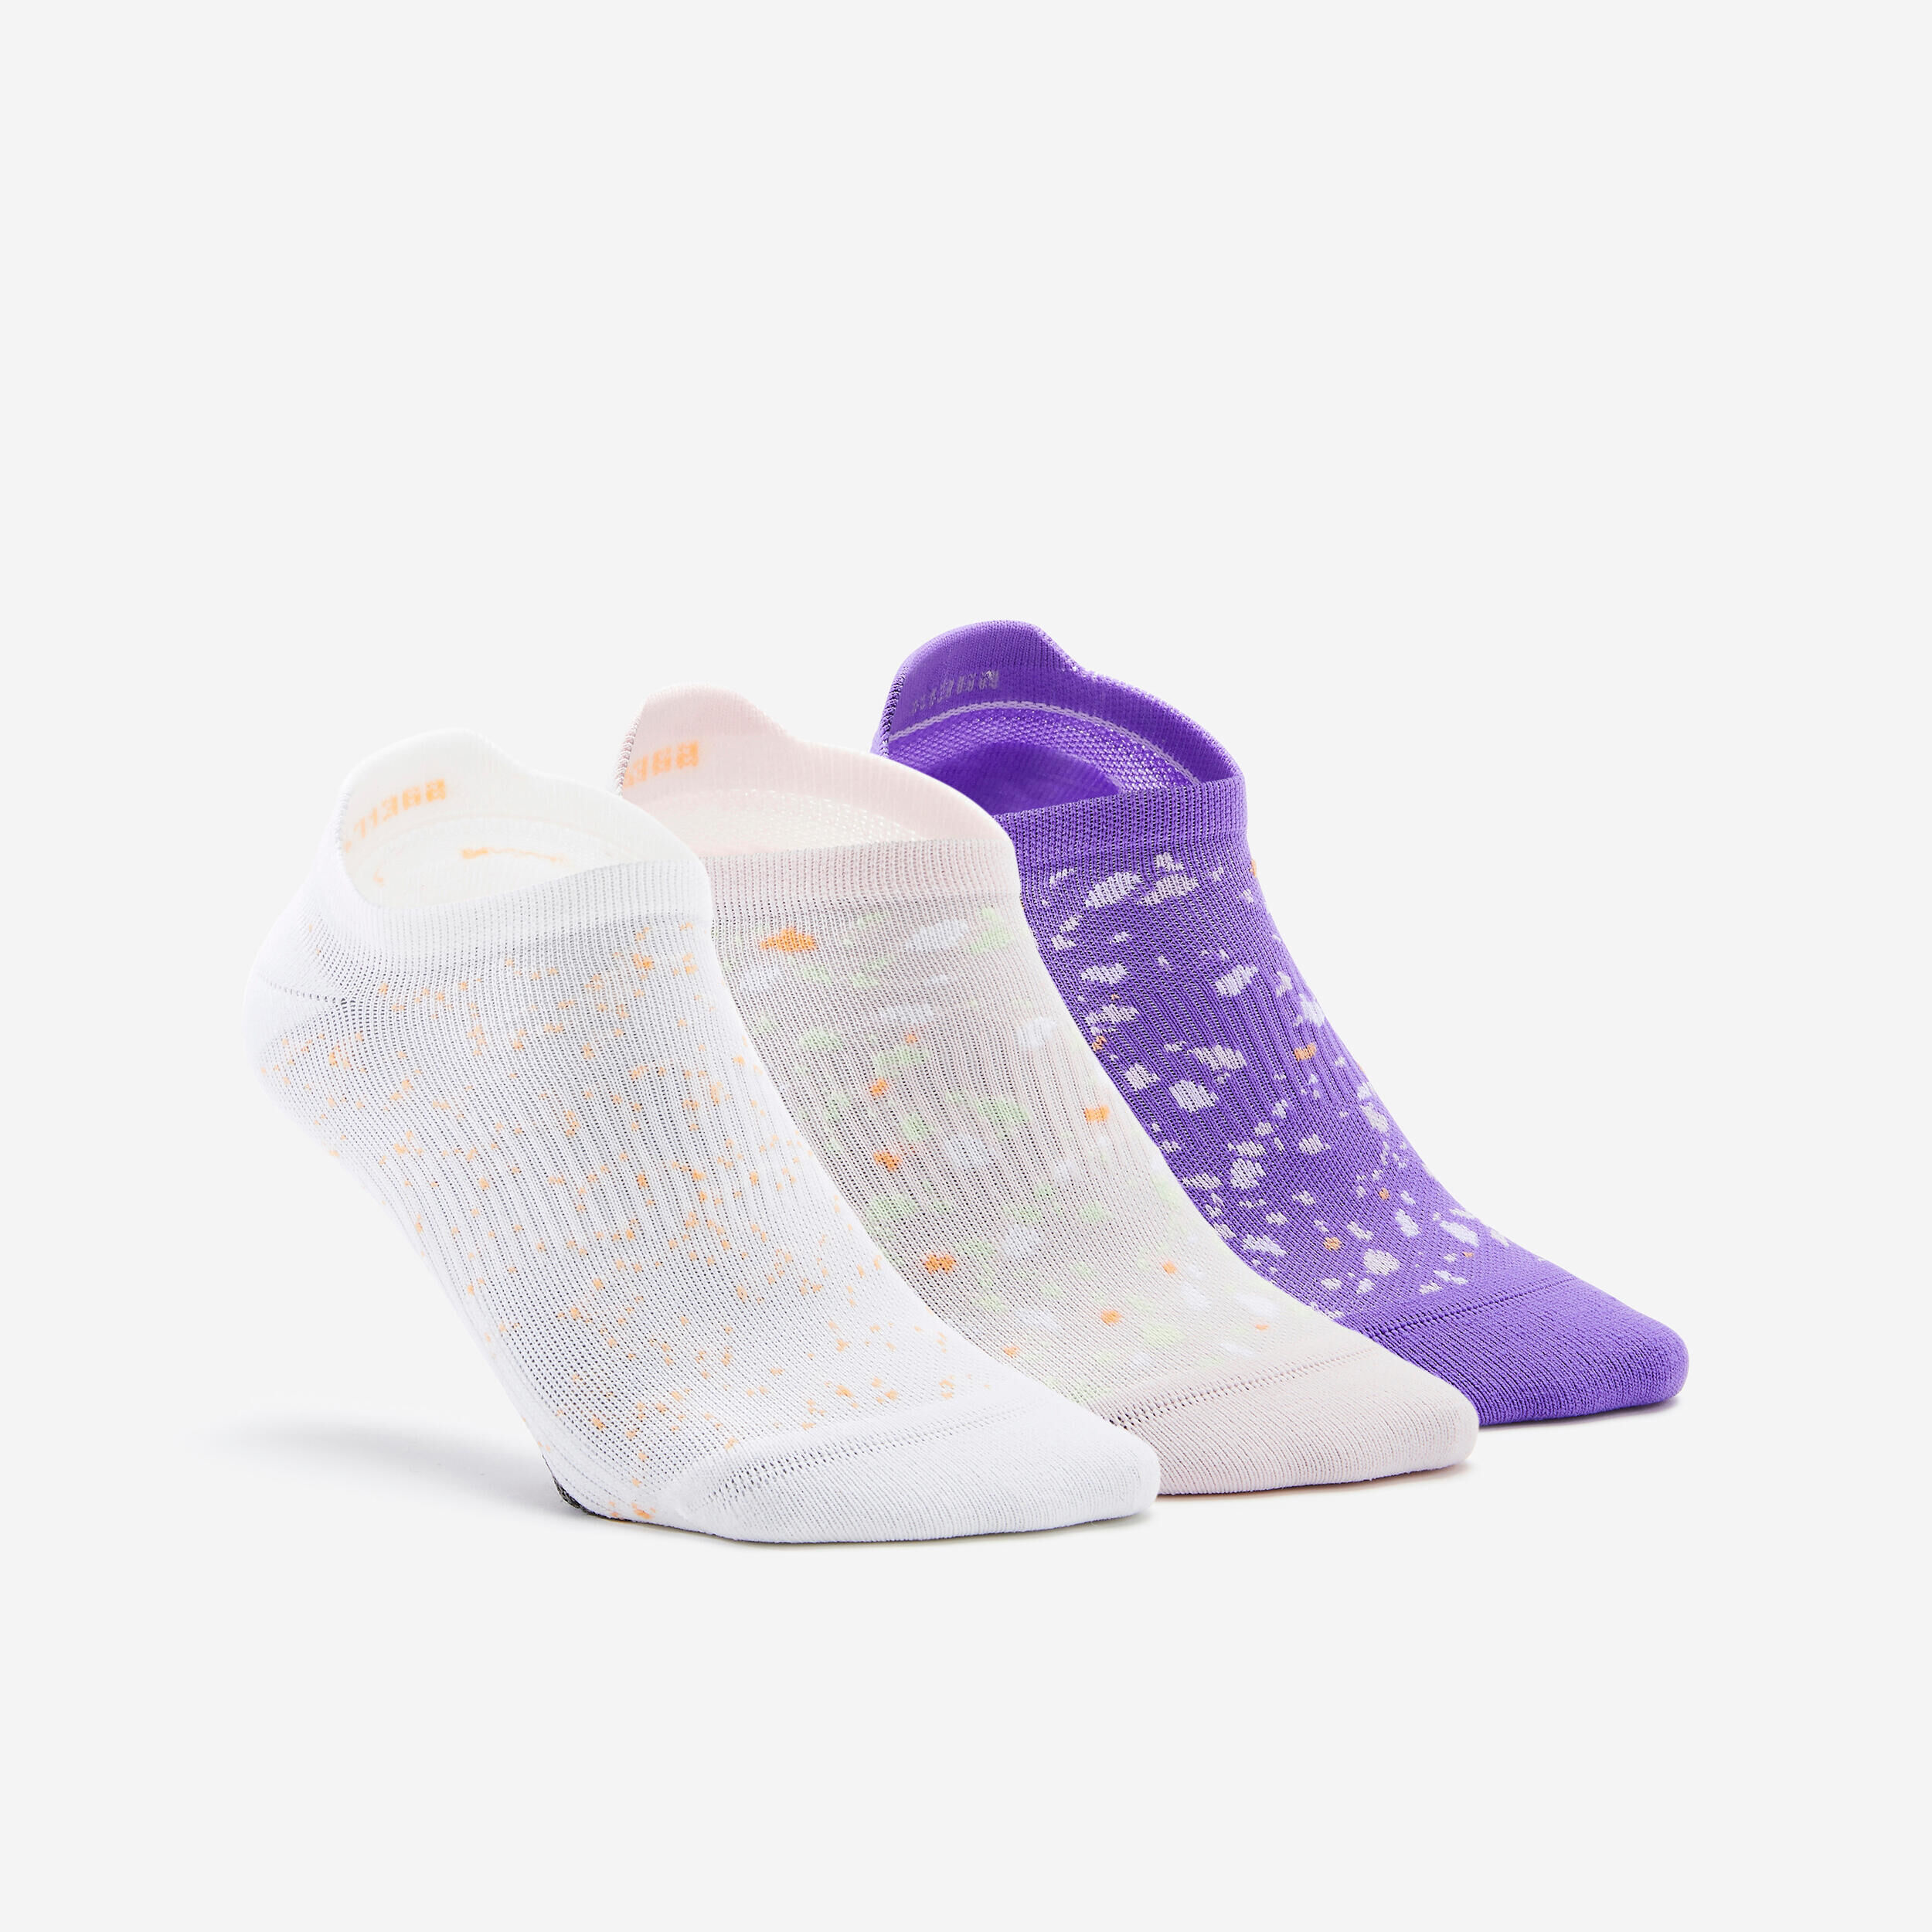 DOMYOS Women's Invisible Socks x 3 - Colour